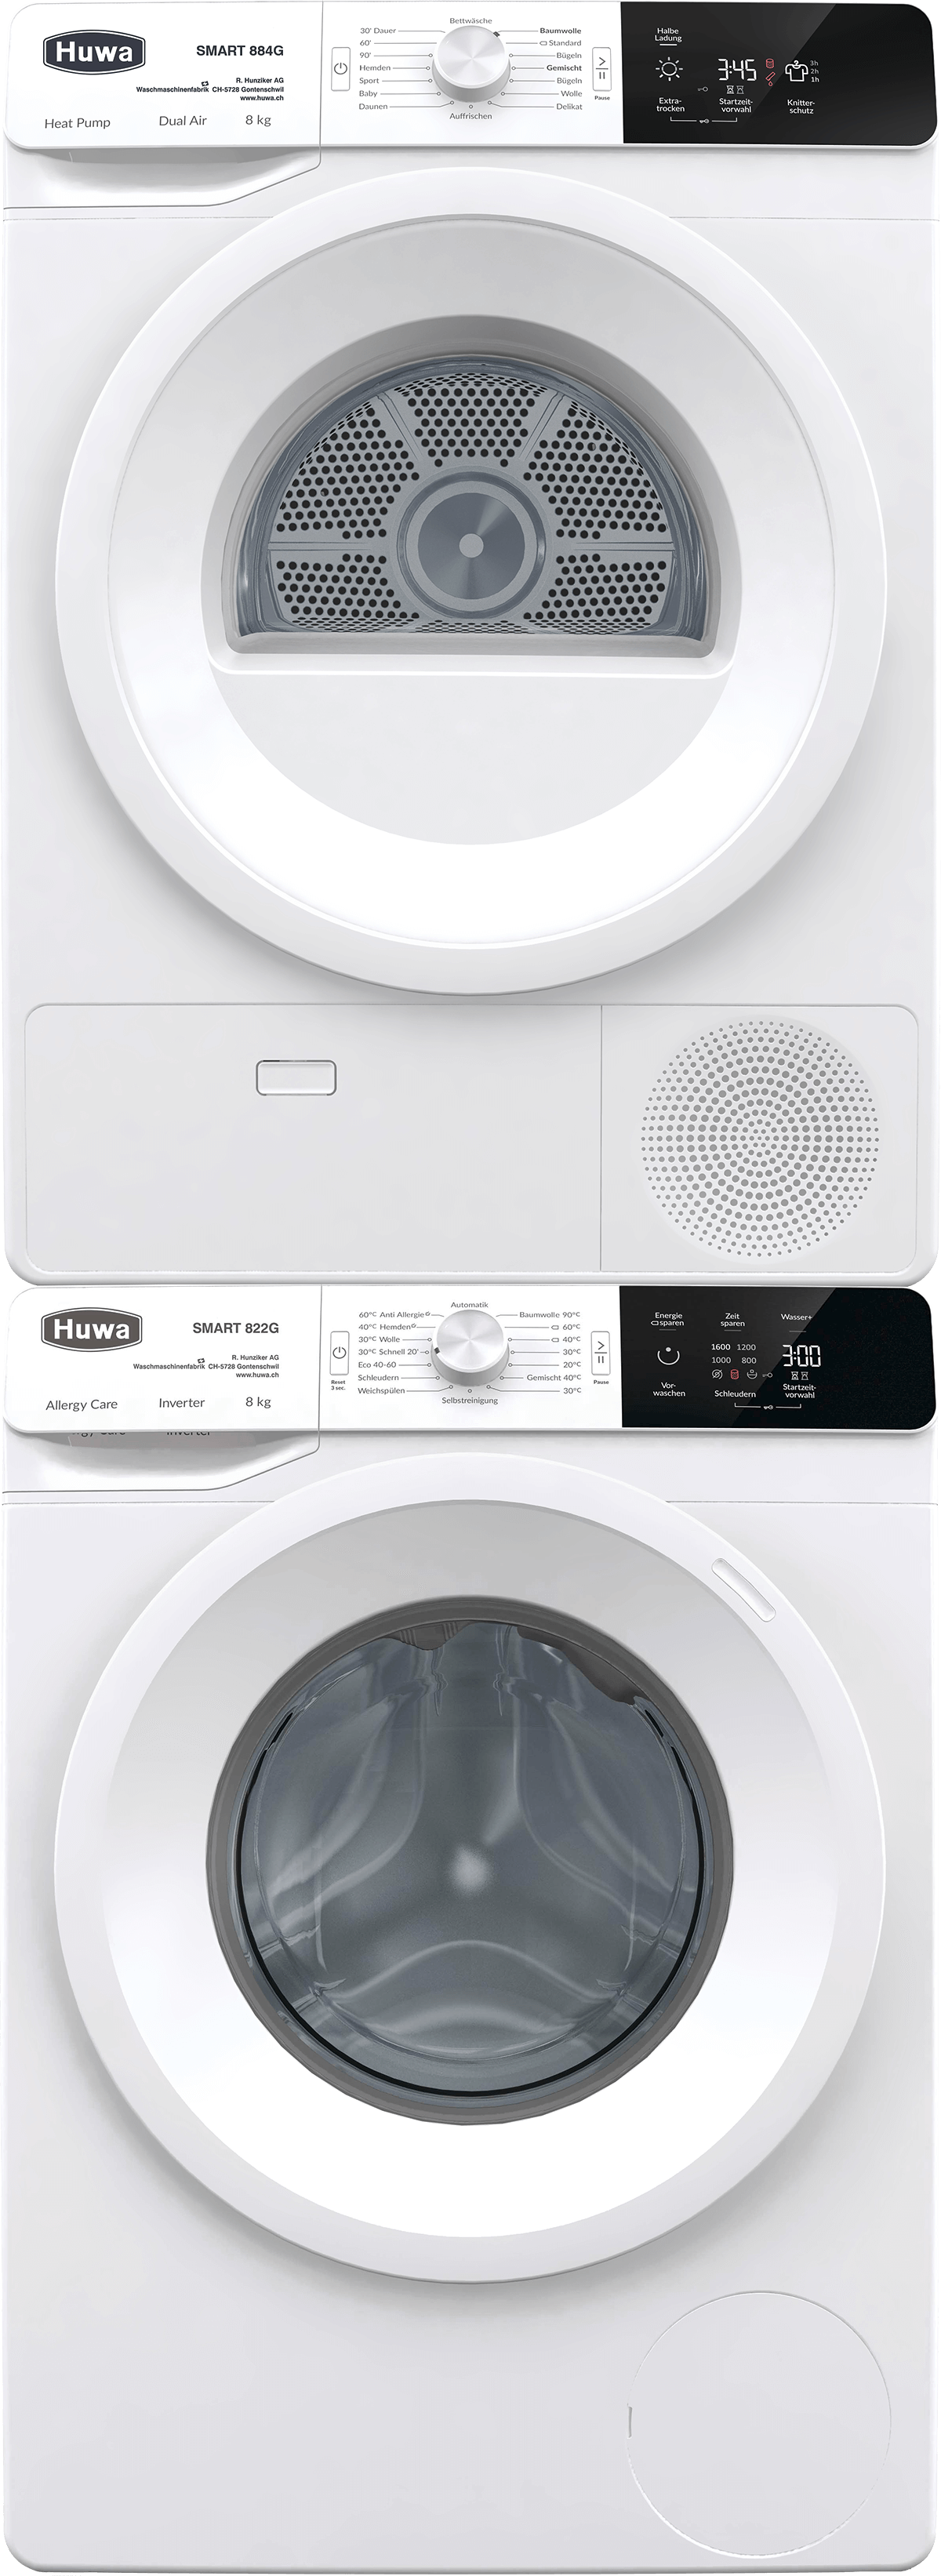 
                            Huwa                            Waschturm Smart 822G und Smart 884G
                            weiss                            